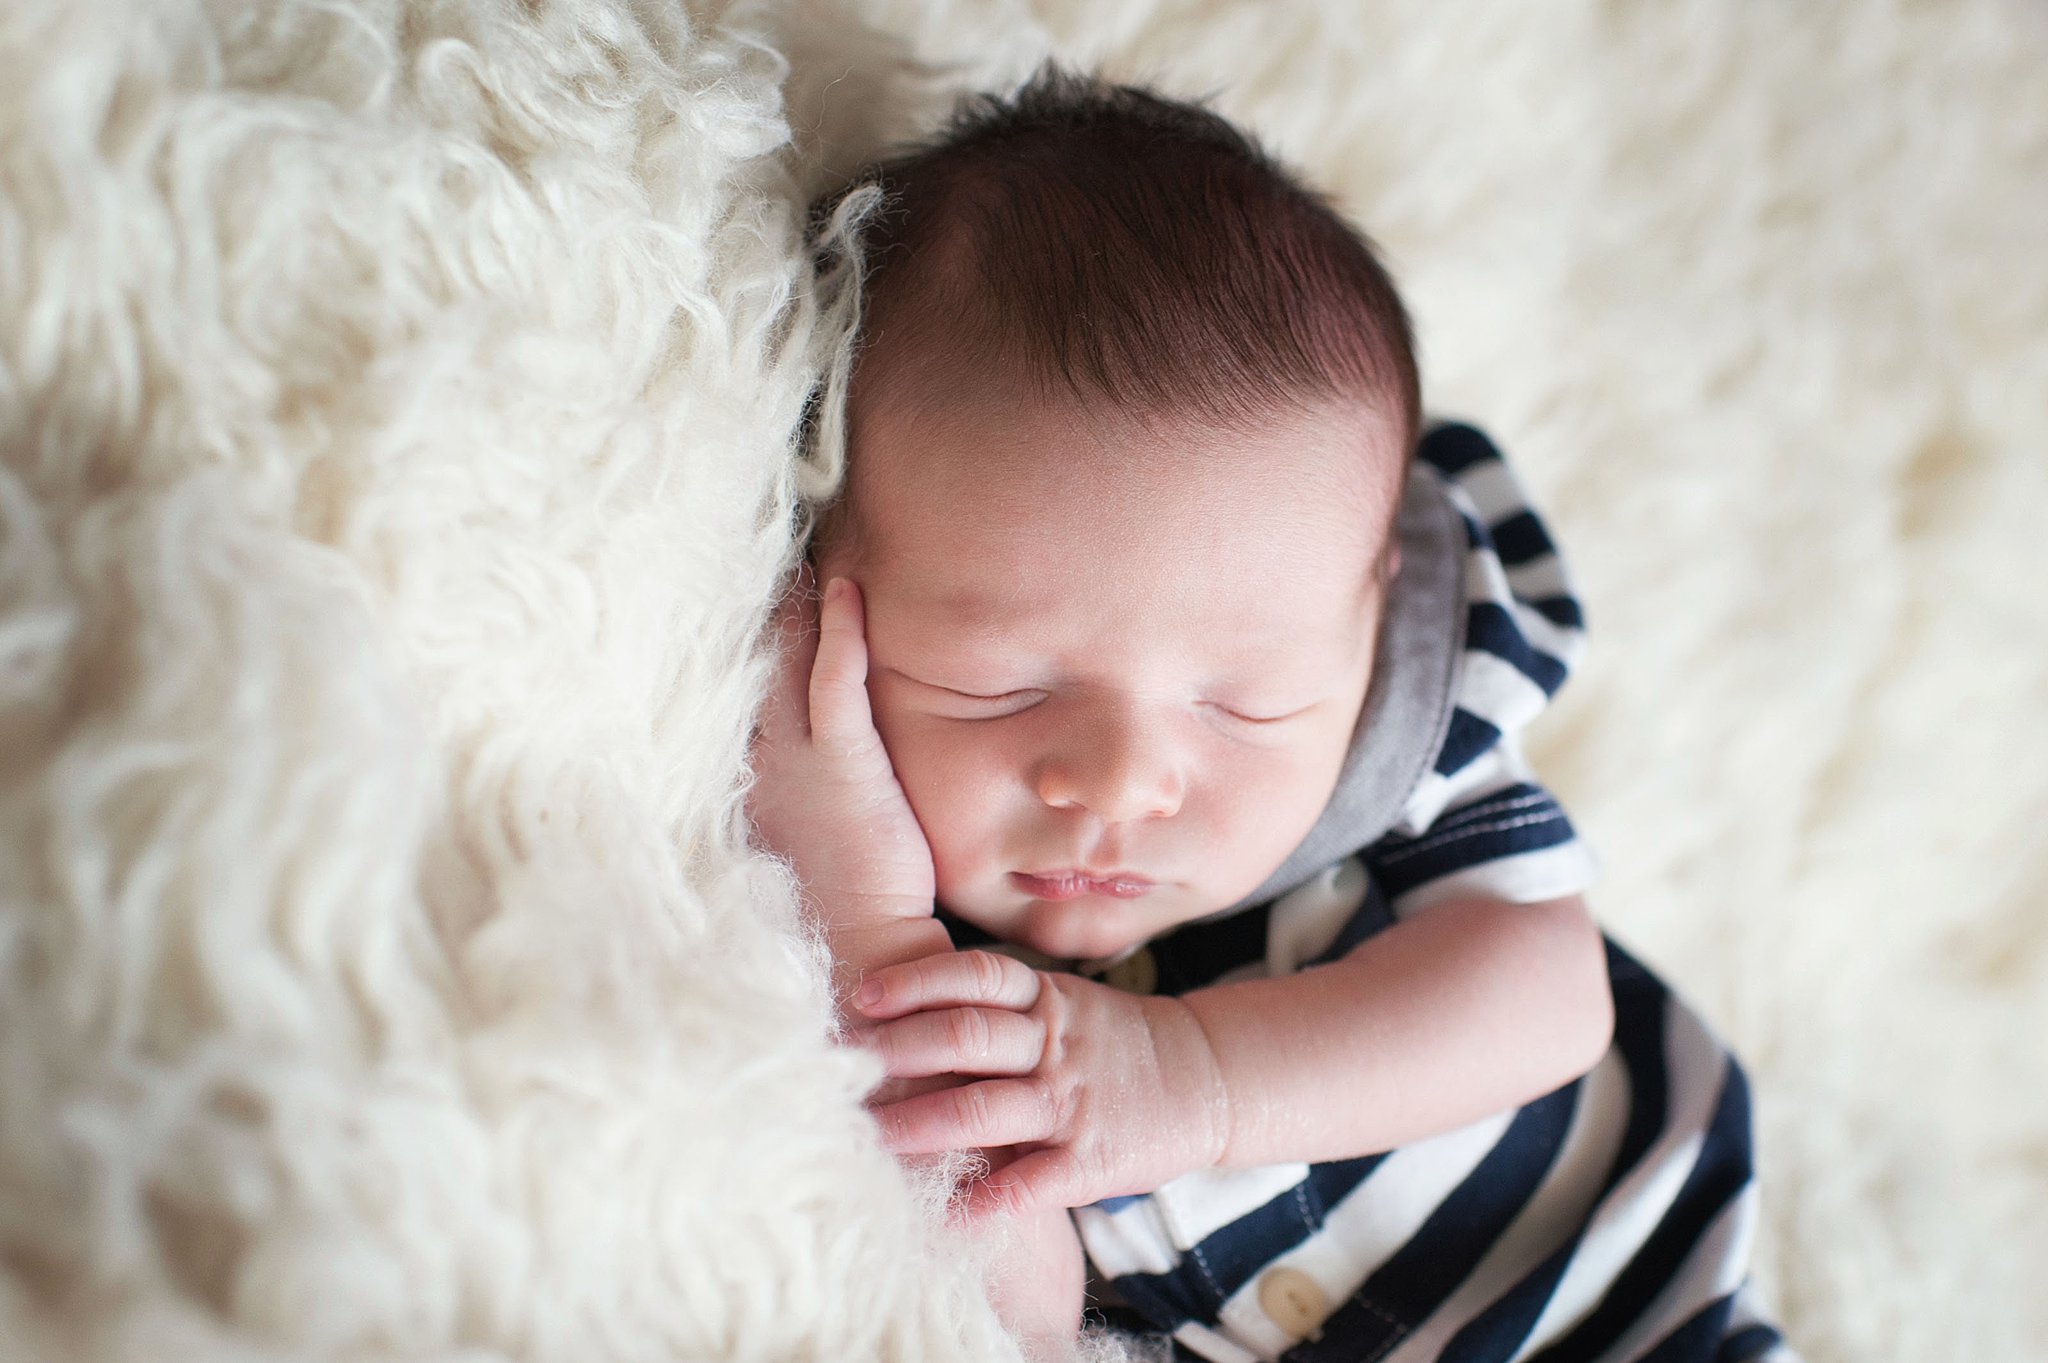 newborn baby sleeps in s striped onesie on a furry blanket Colorado Springs birthing center